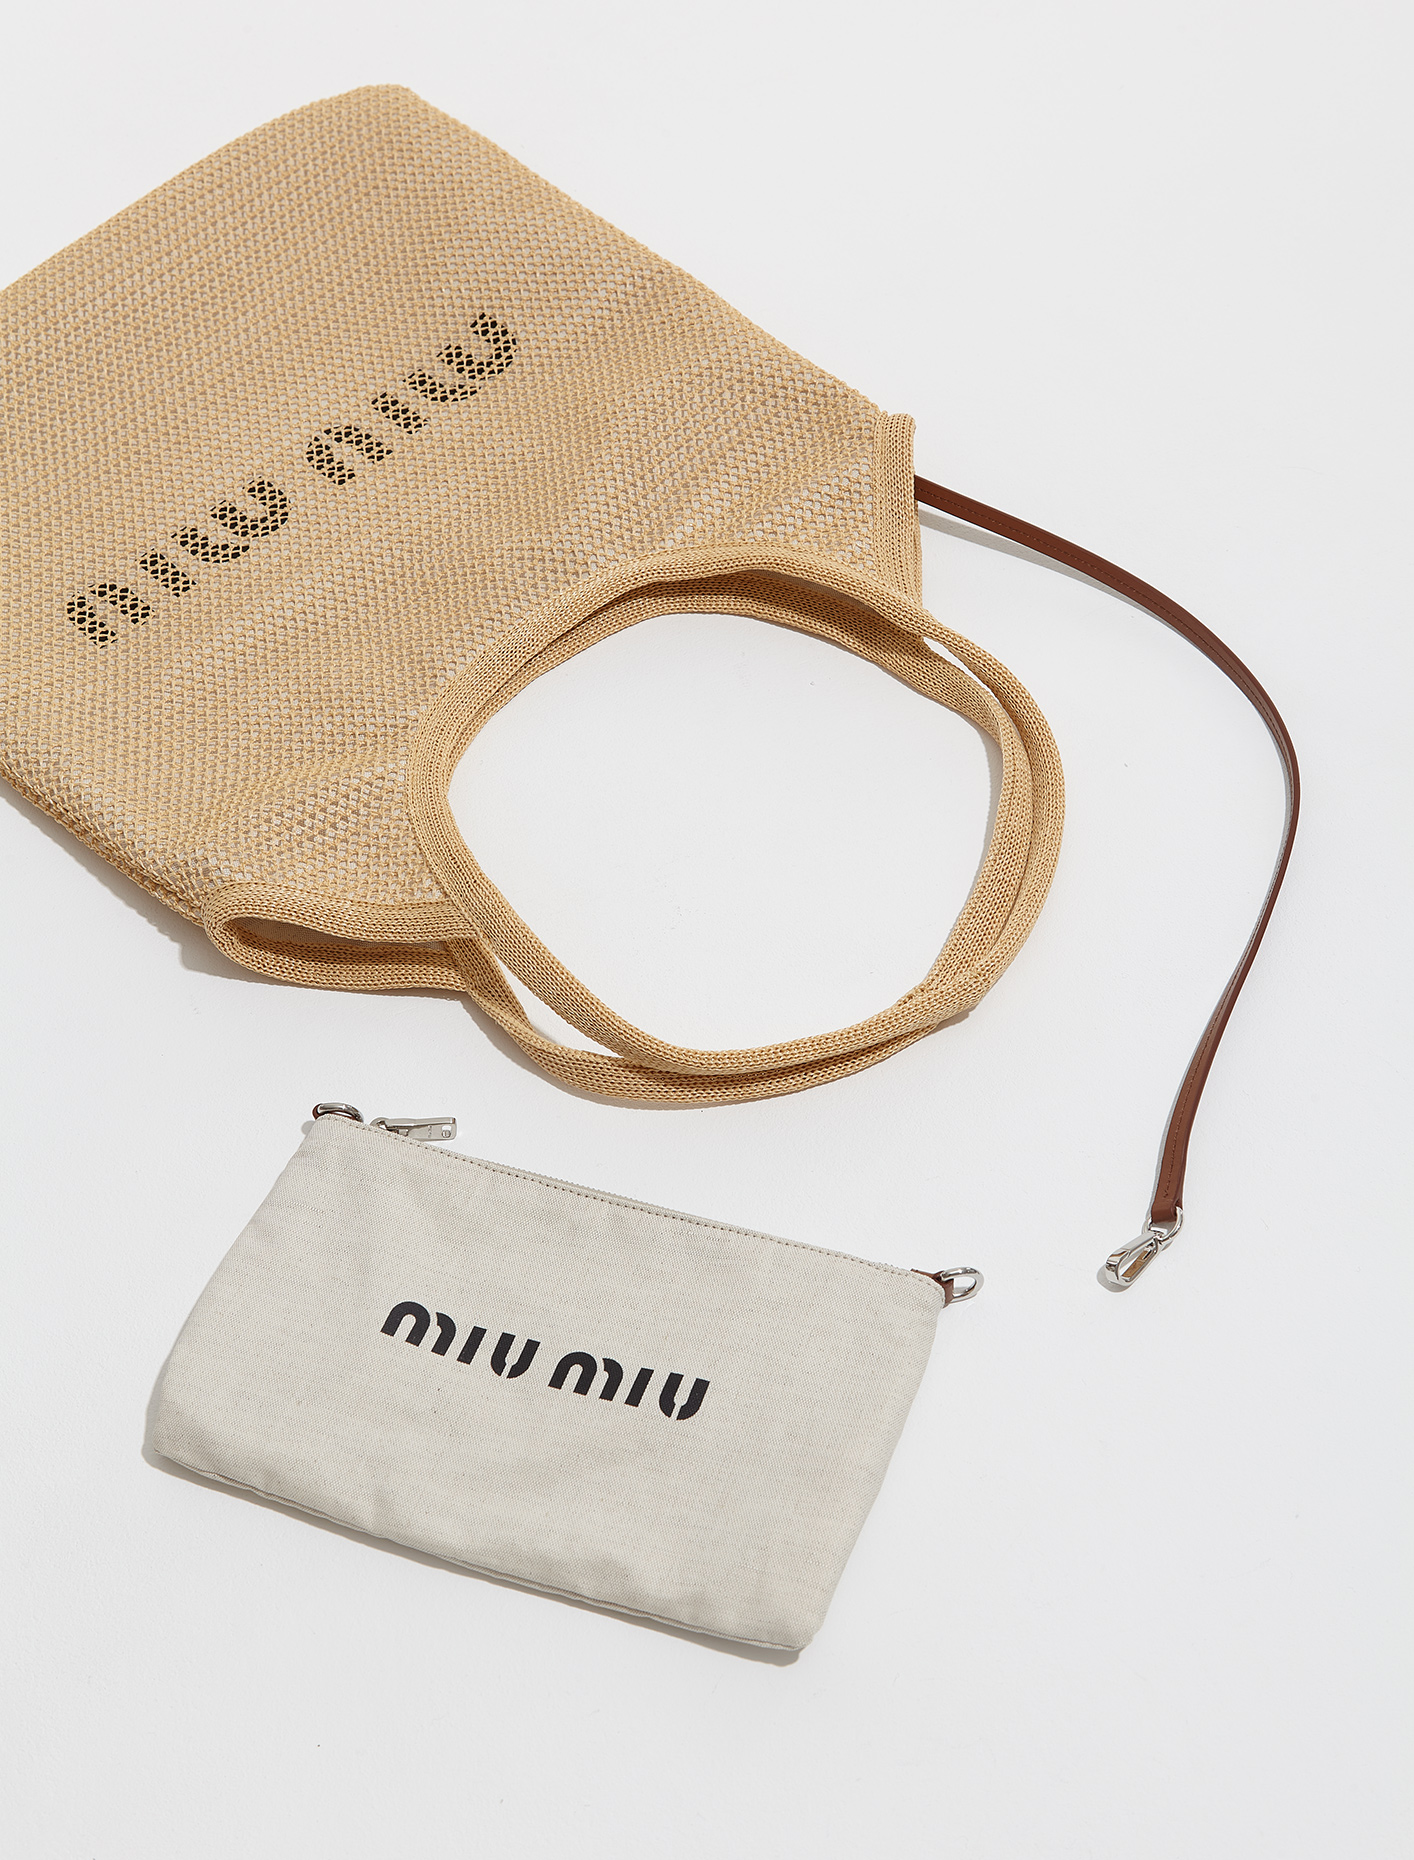 Miu Miu Raffia and Linen Tote Bag in Natural | Voo Store Berlin ...